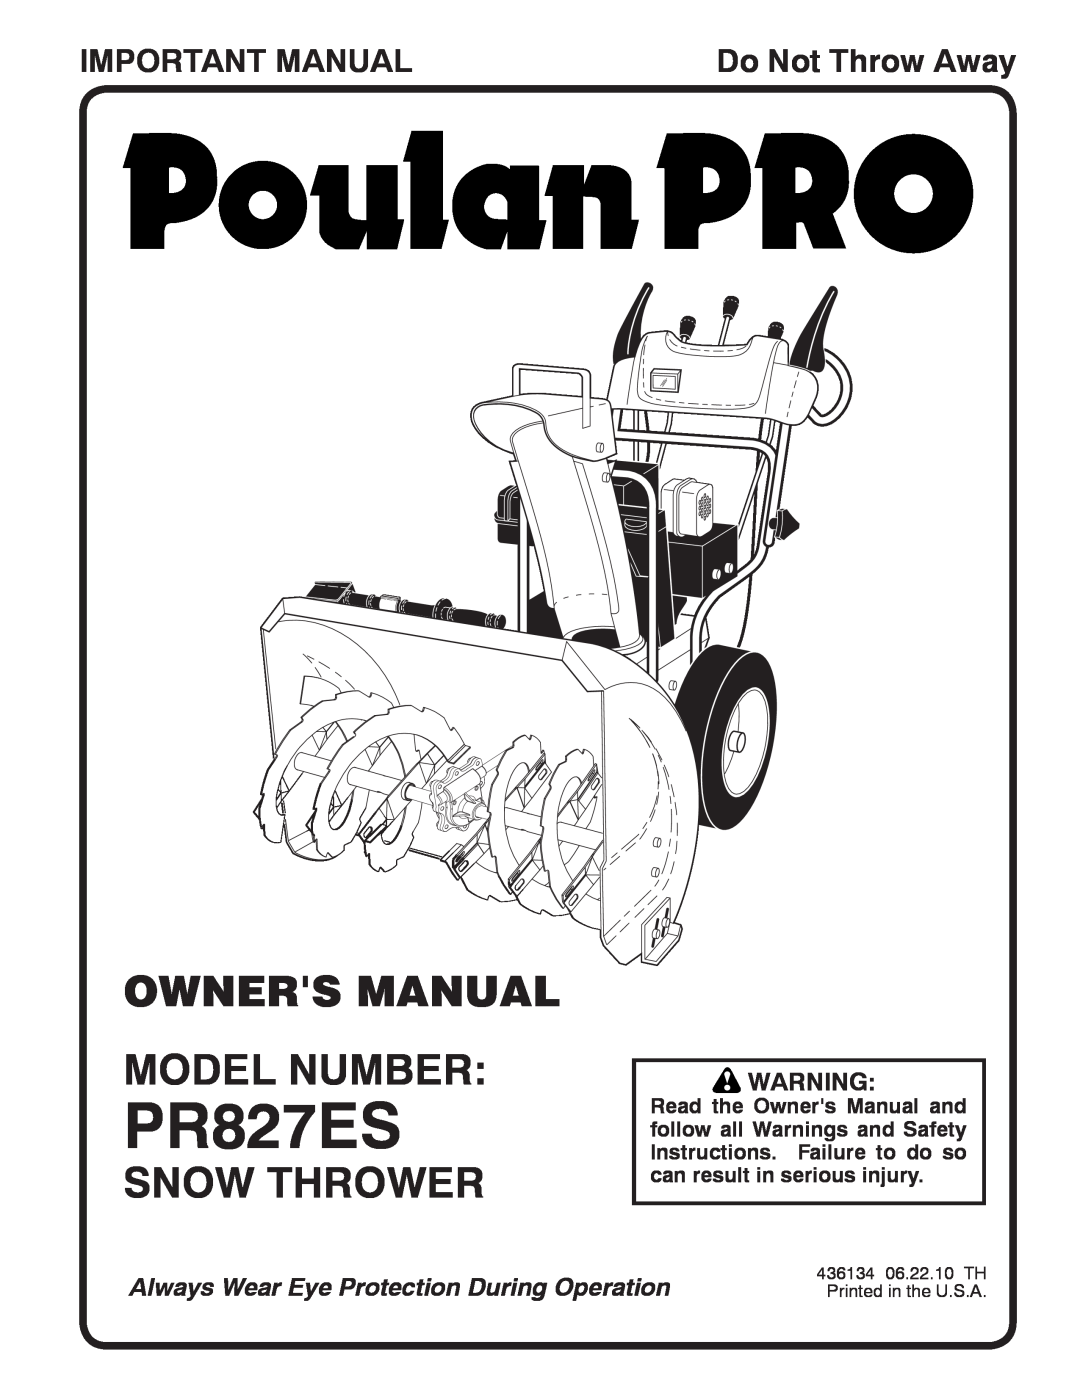 Poulan 96192004300, 436134 owner manual Snow Thrower, Important Manual, PR827ES, Do Not Throw Away 